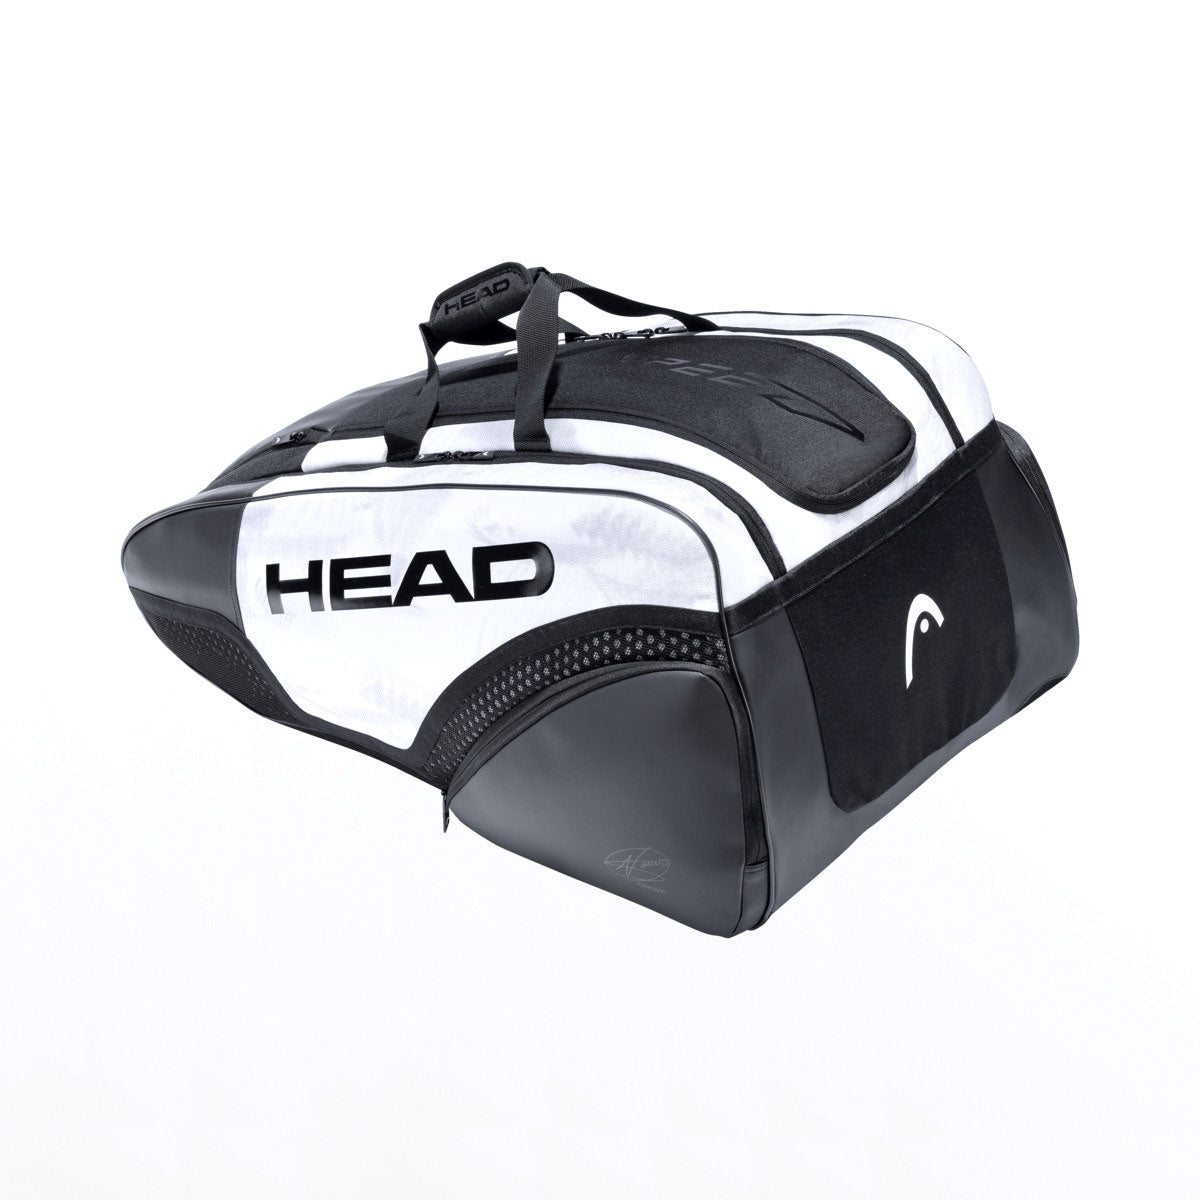 Head Djokovic 12R Monstercombi Bag 283061